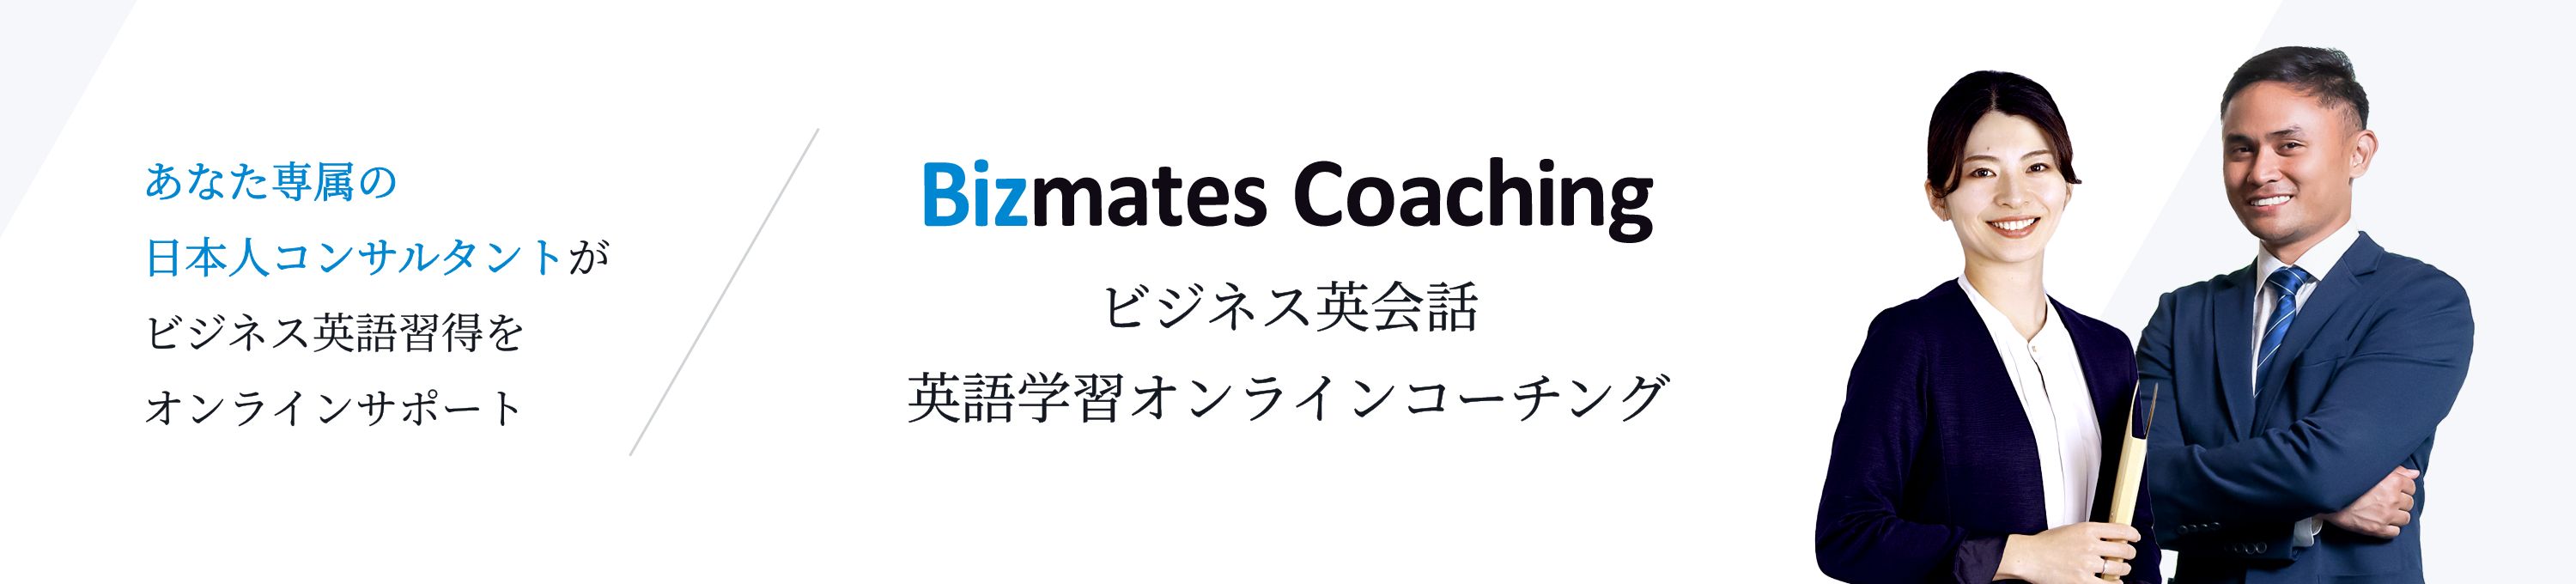 Bizmates Coaching Plans